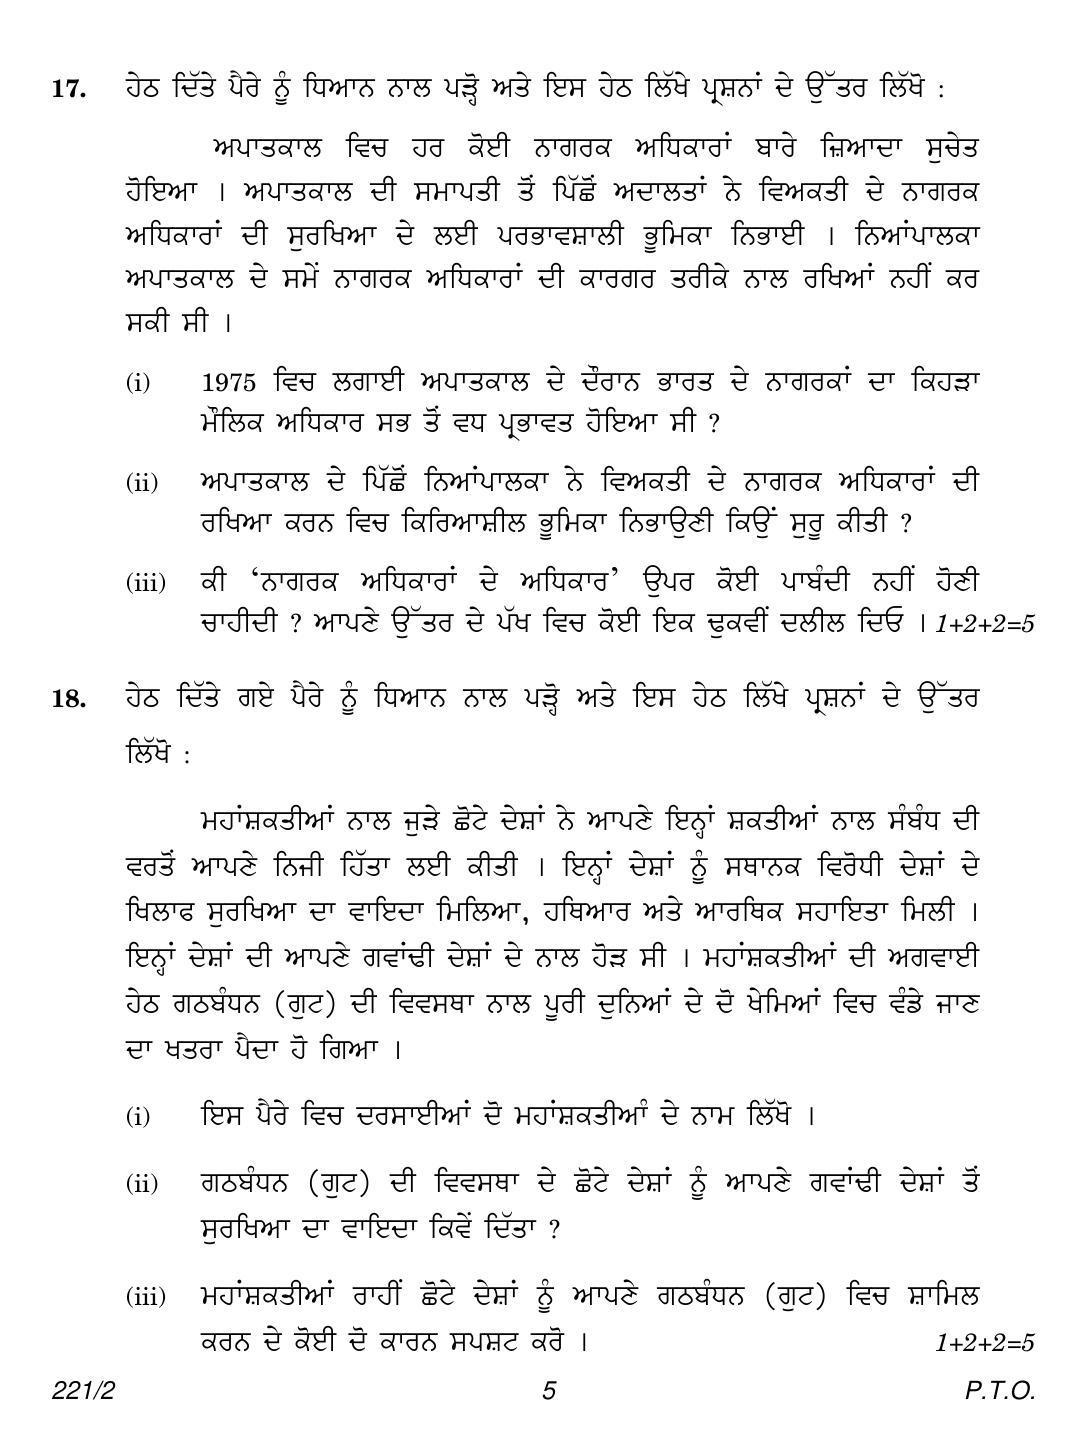 CBSE Class 12 221-2 (Political Science Punjabi) 2018 Question Paper - Page 5